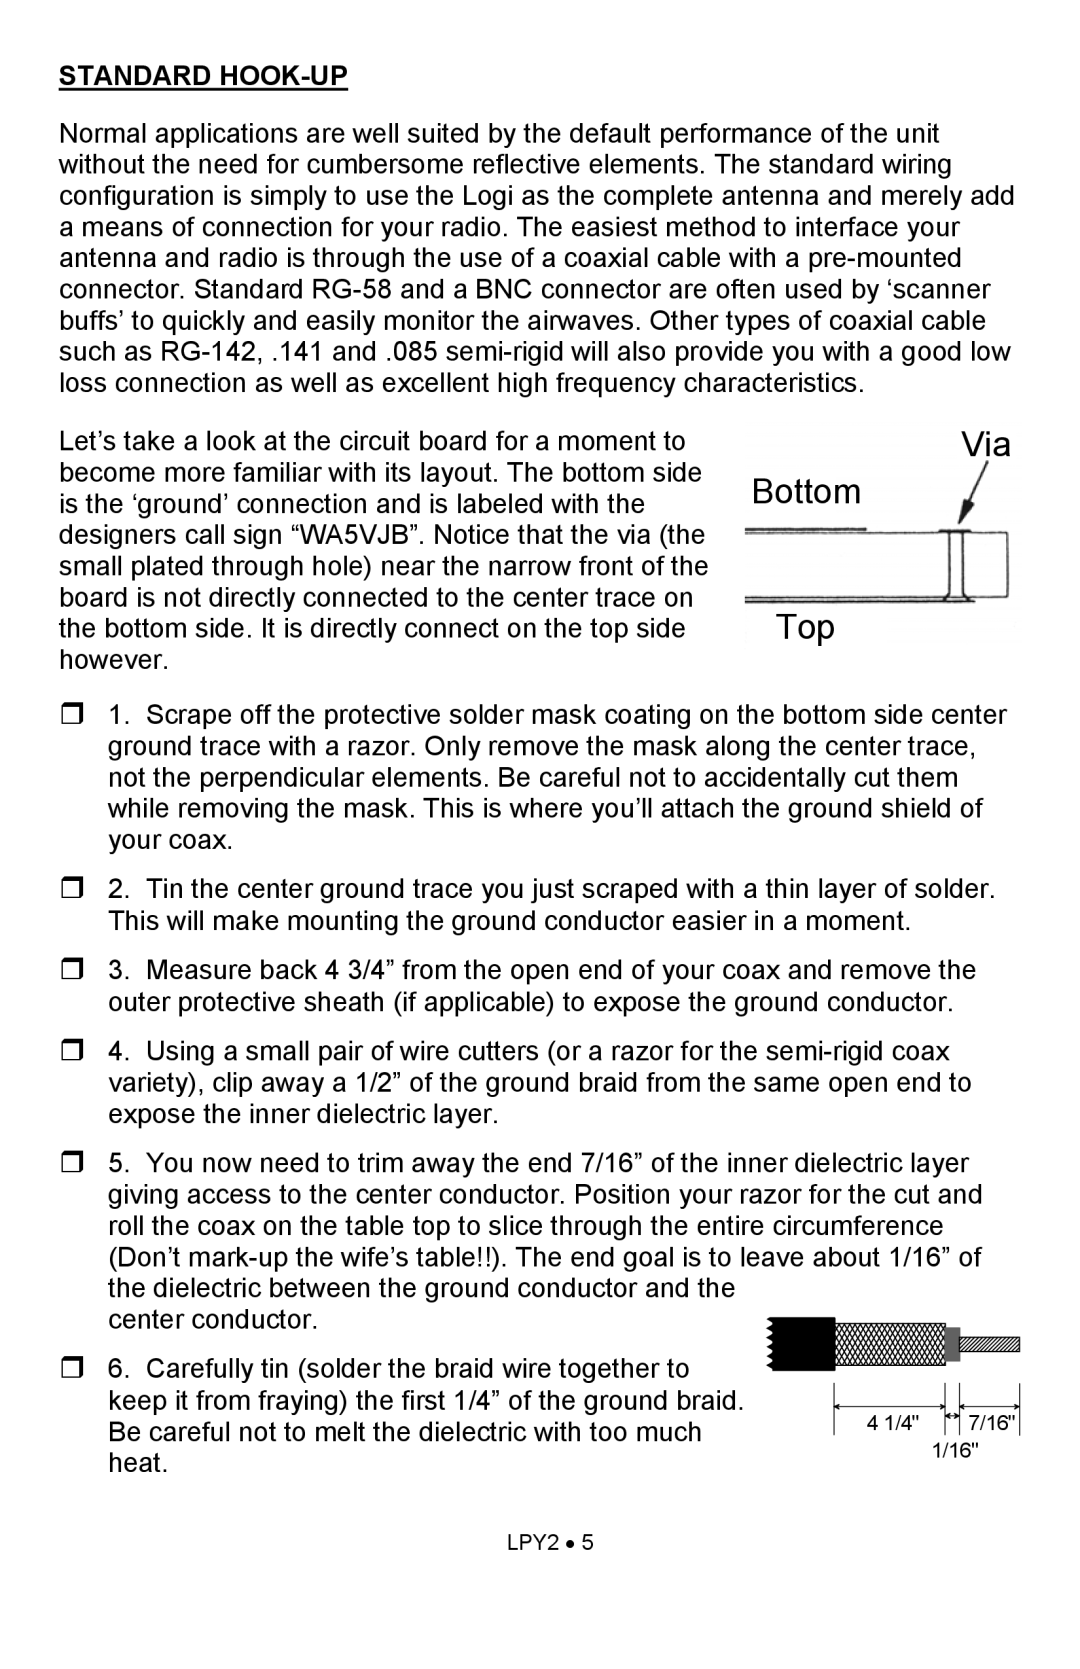 Ramsey Electronics LPY915 manual Via Bottom Top, Standard Hook-Up 